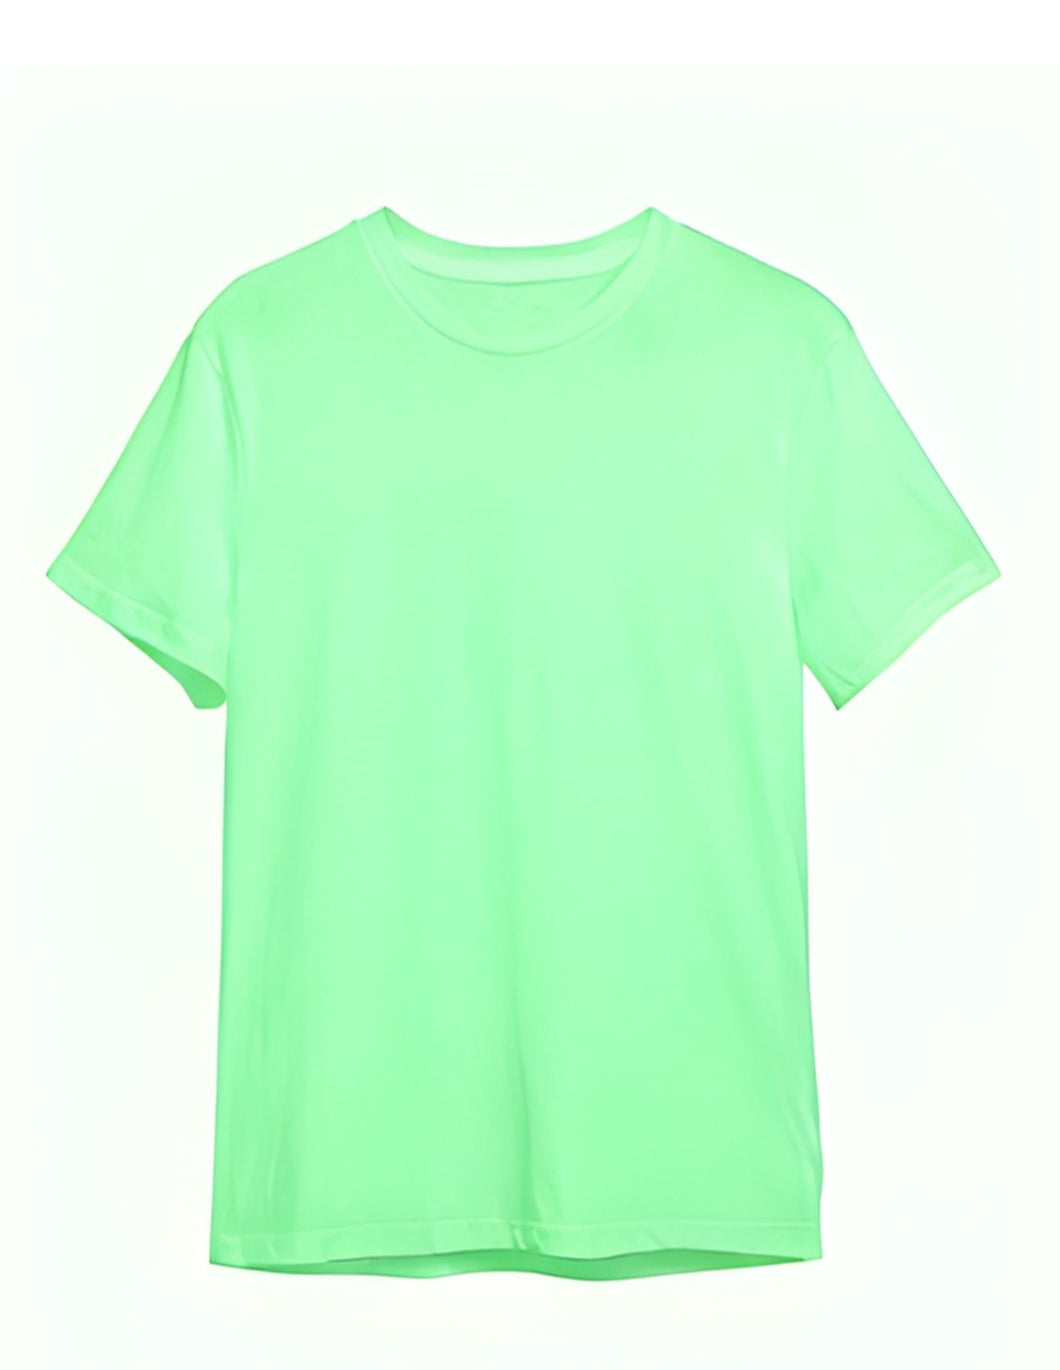 Undeez Basic Lime T-Shirt